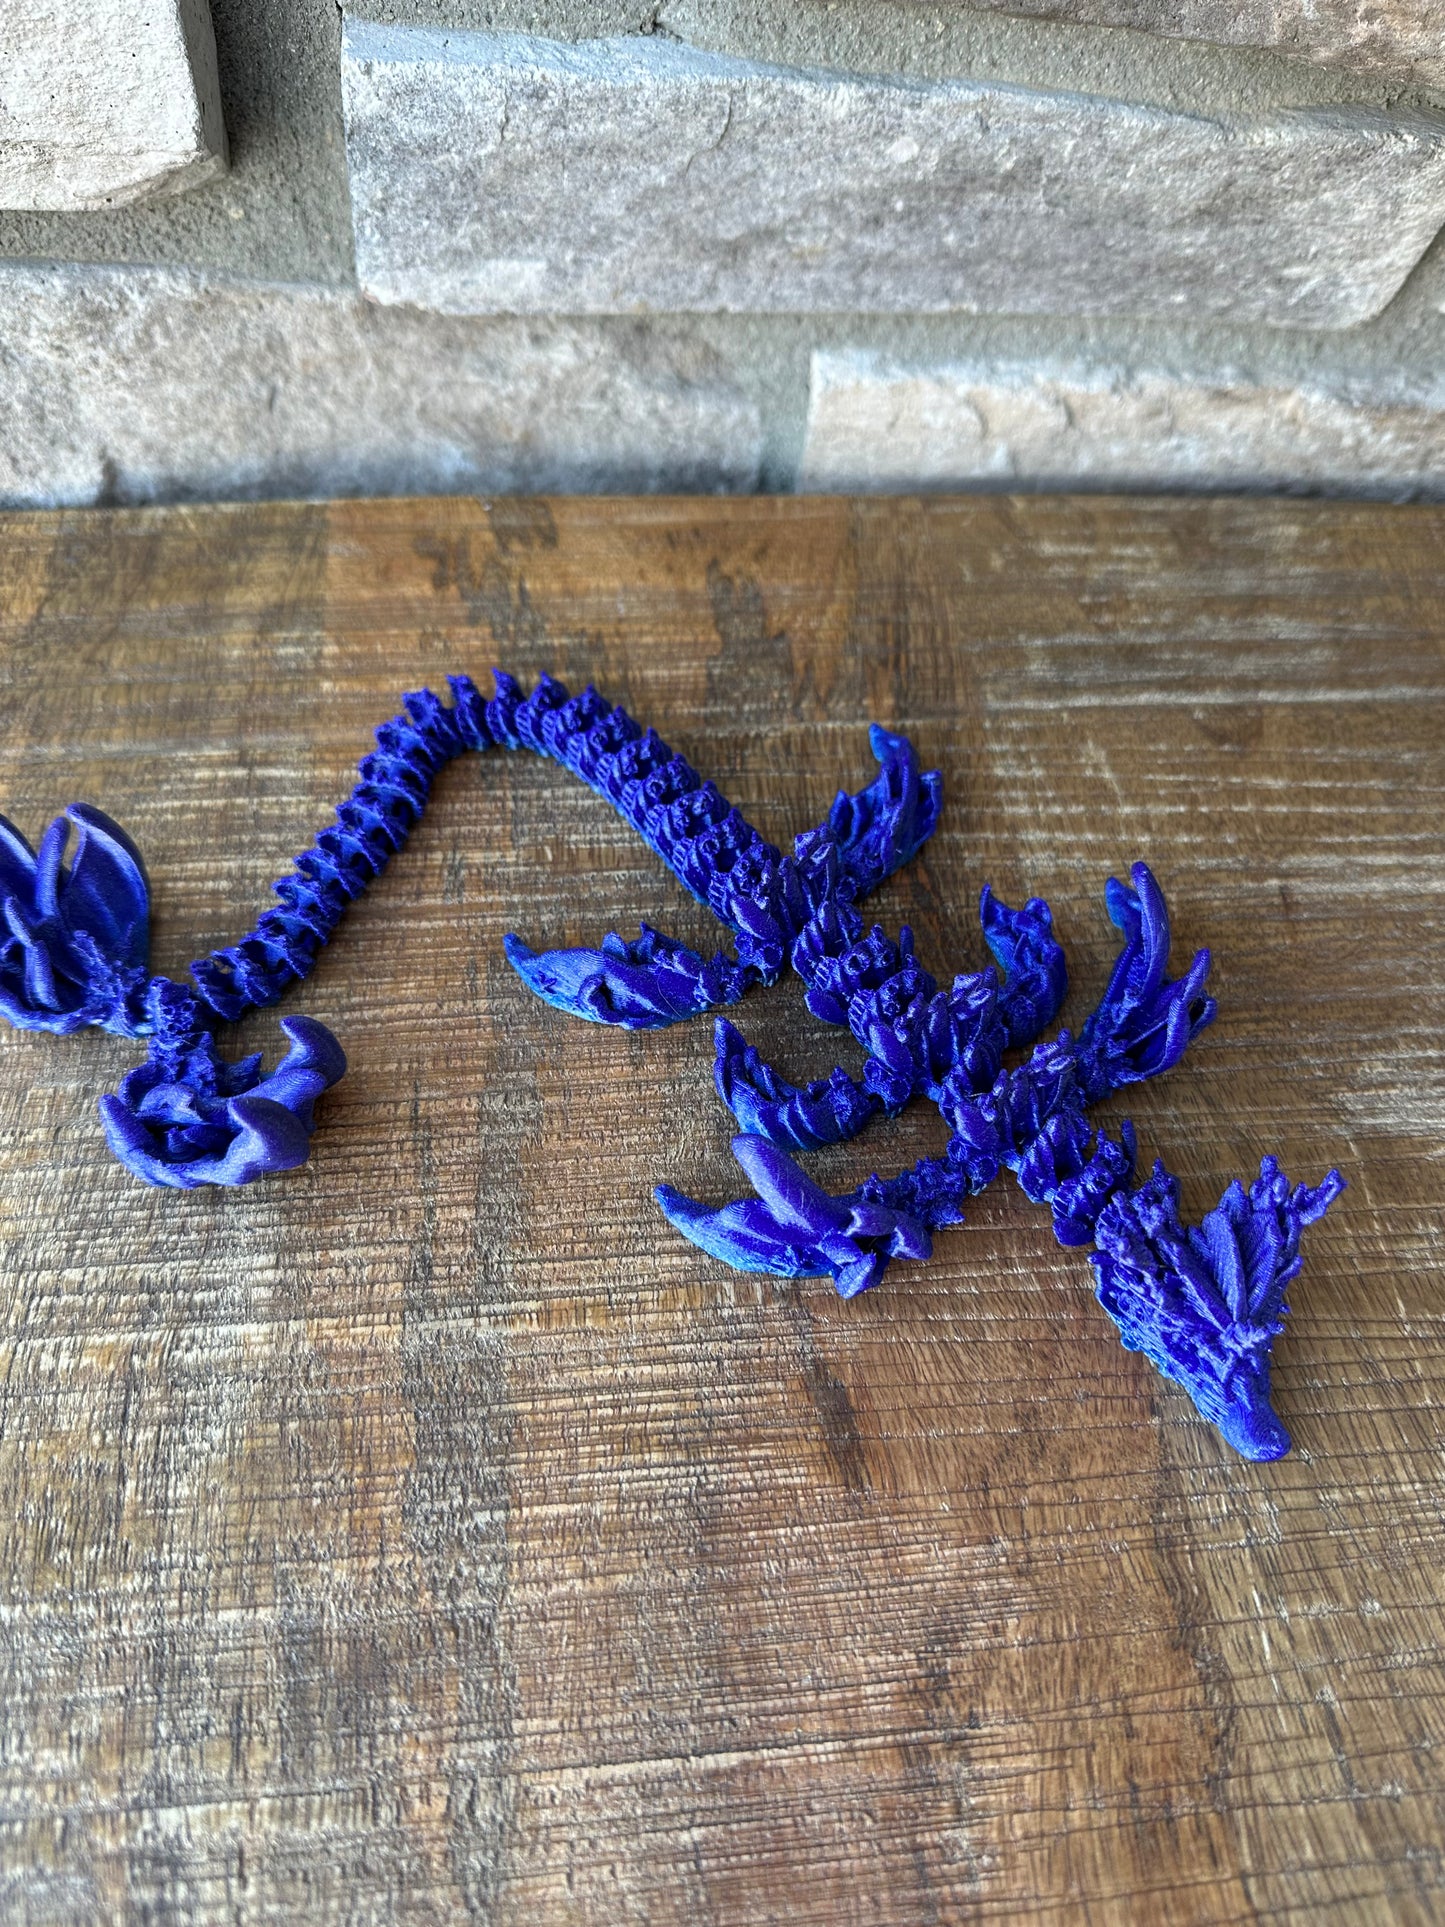 MINI Coral Reef Dragon | 3d Printed | Articulated Flexible | Custom Fidget Toy